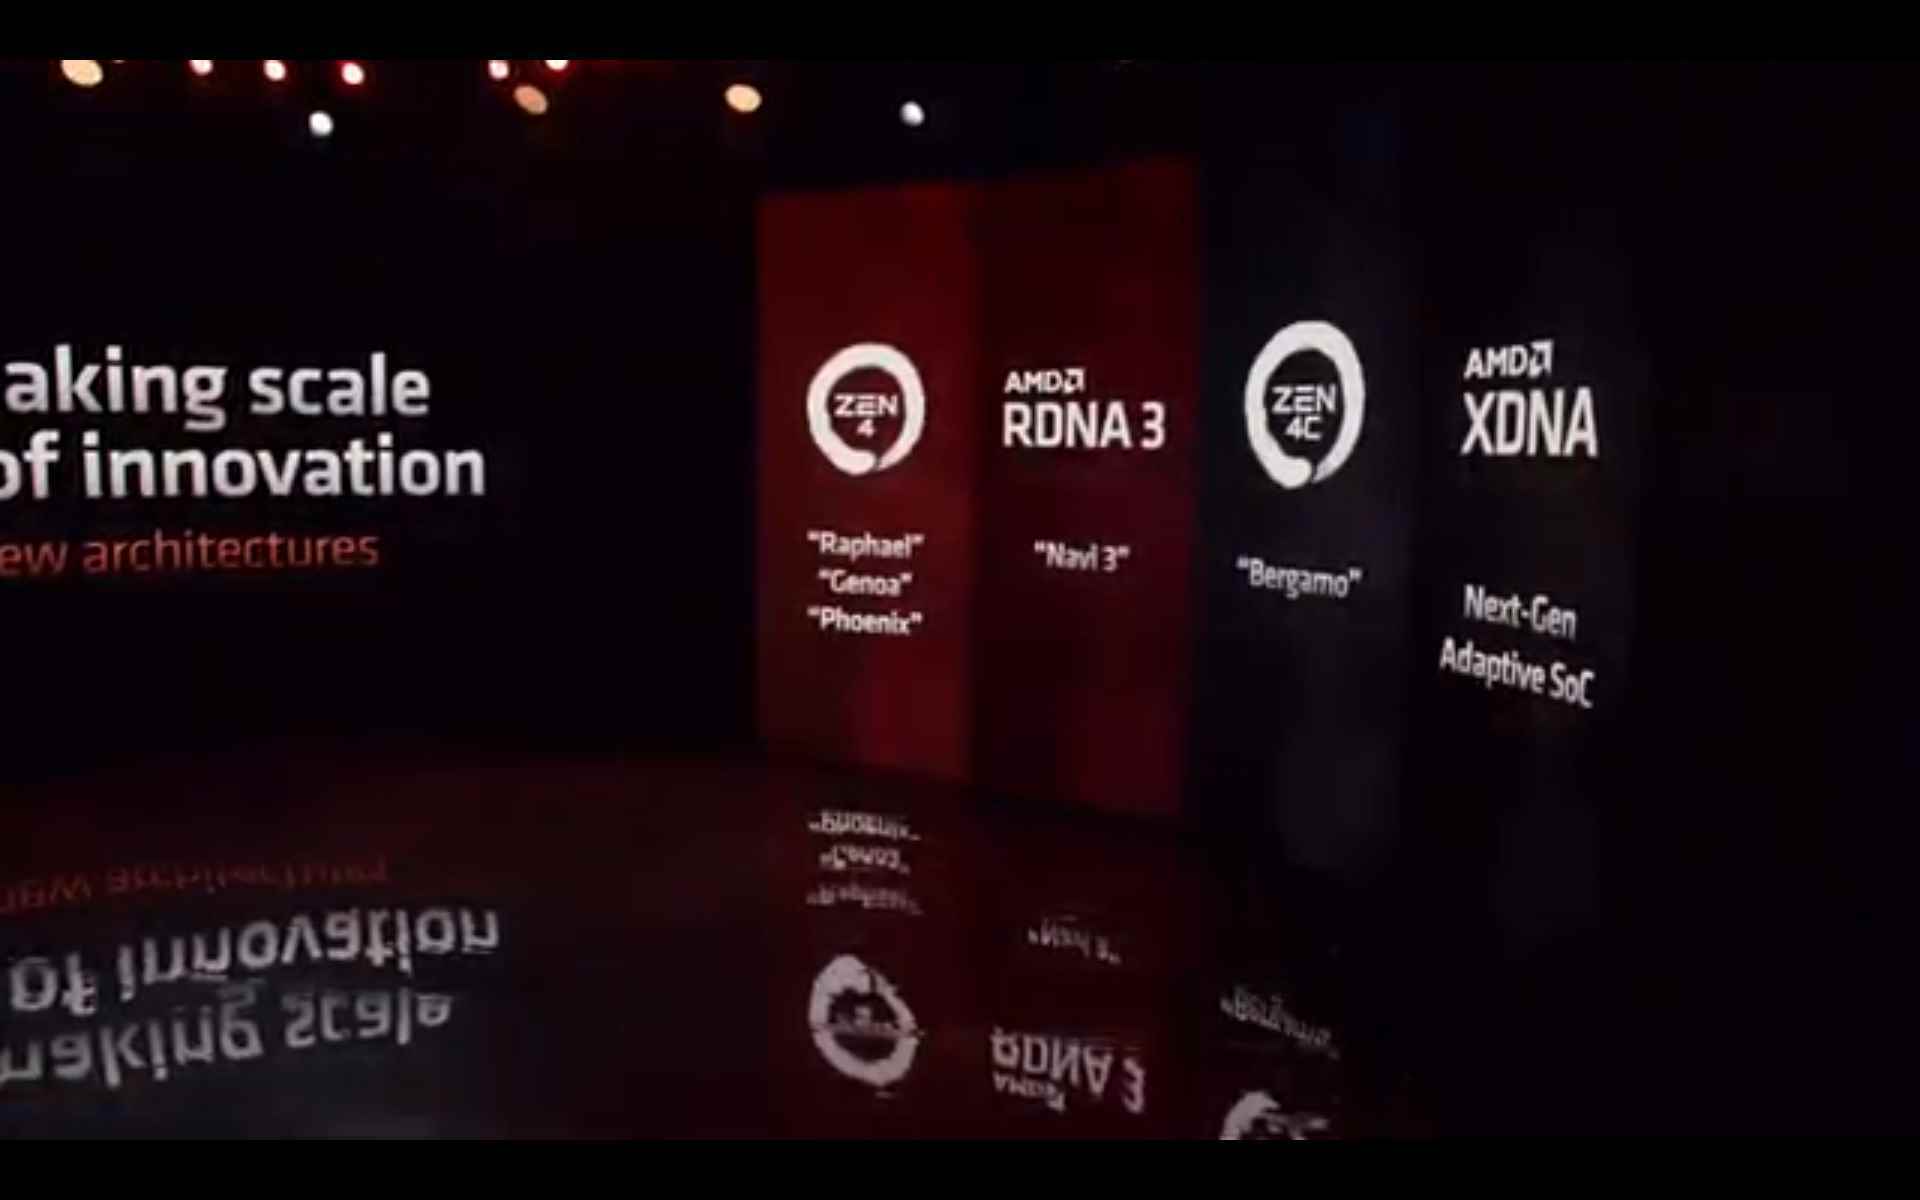 AMD konferansı